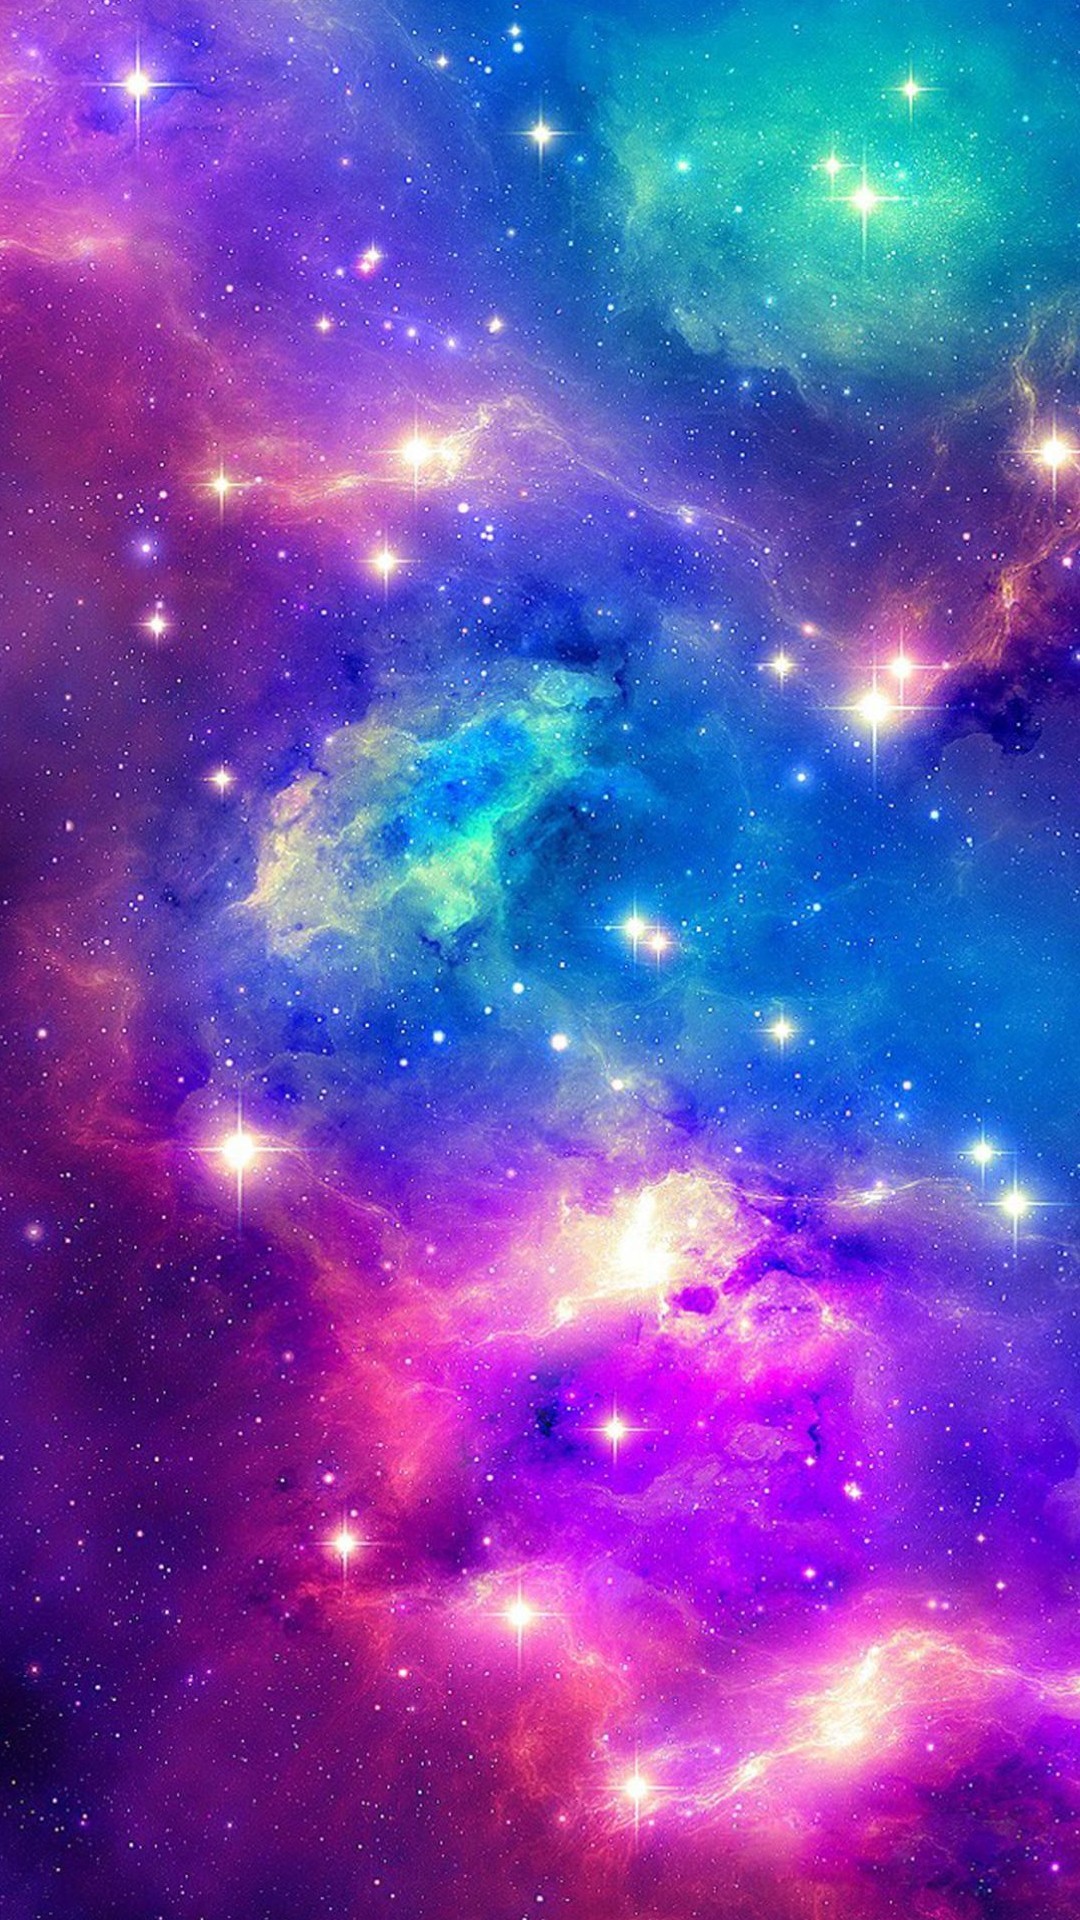 Galaxy wallpaper Tumblr ·① Download free beautiful ...